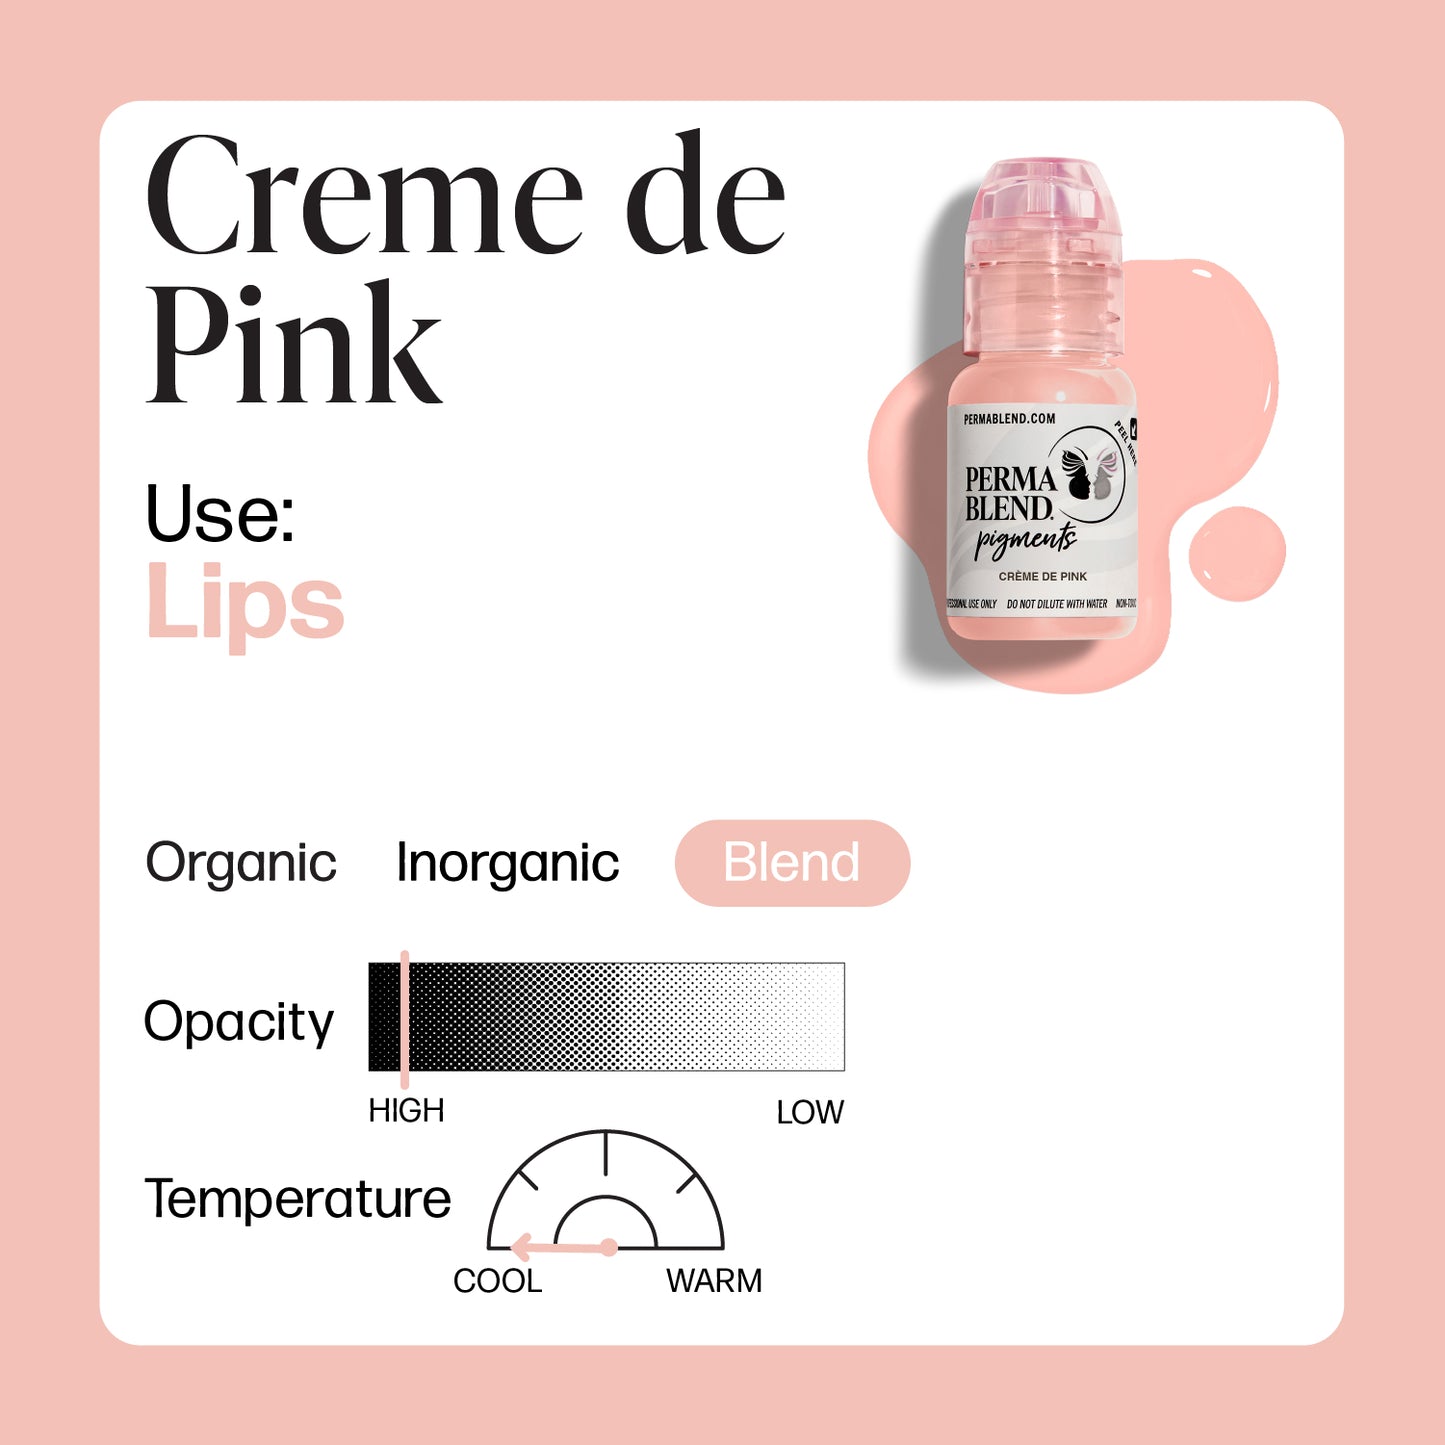 Perma Blend Creme de Pink